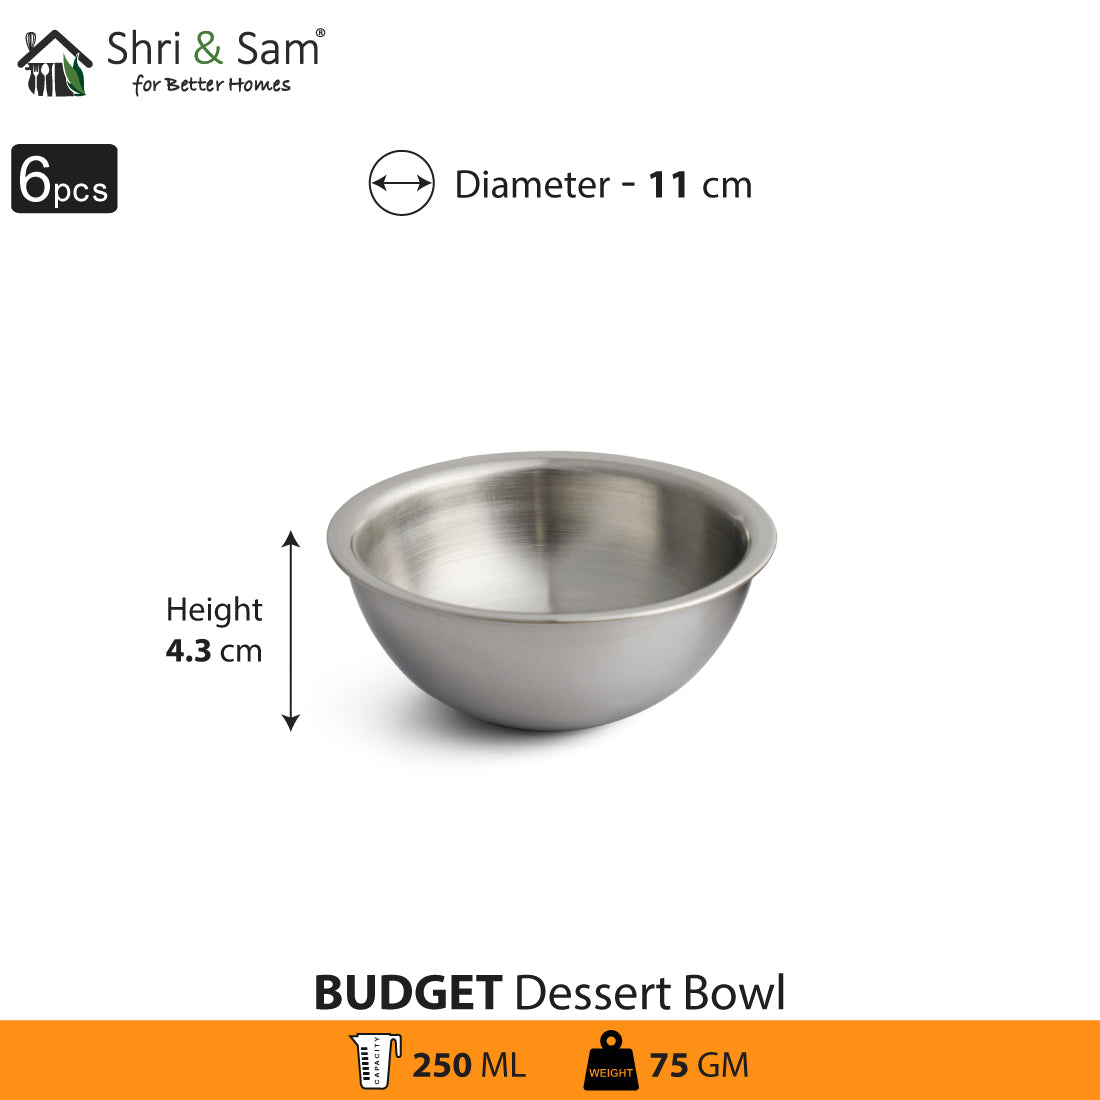 Stainless Steel 6 PCS Dessert Bowl Budget